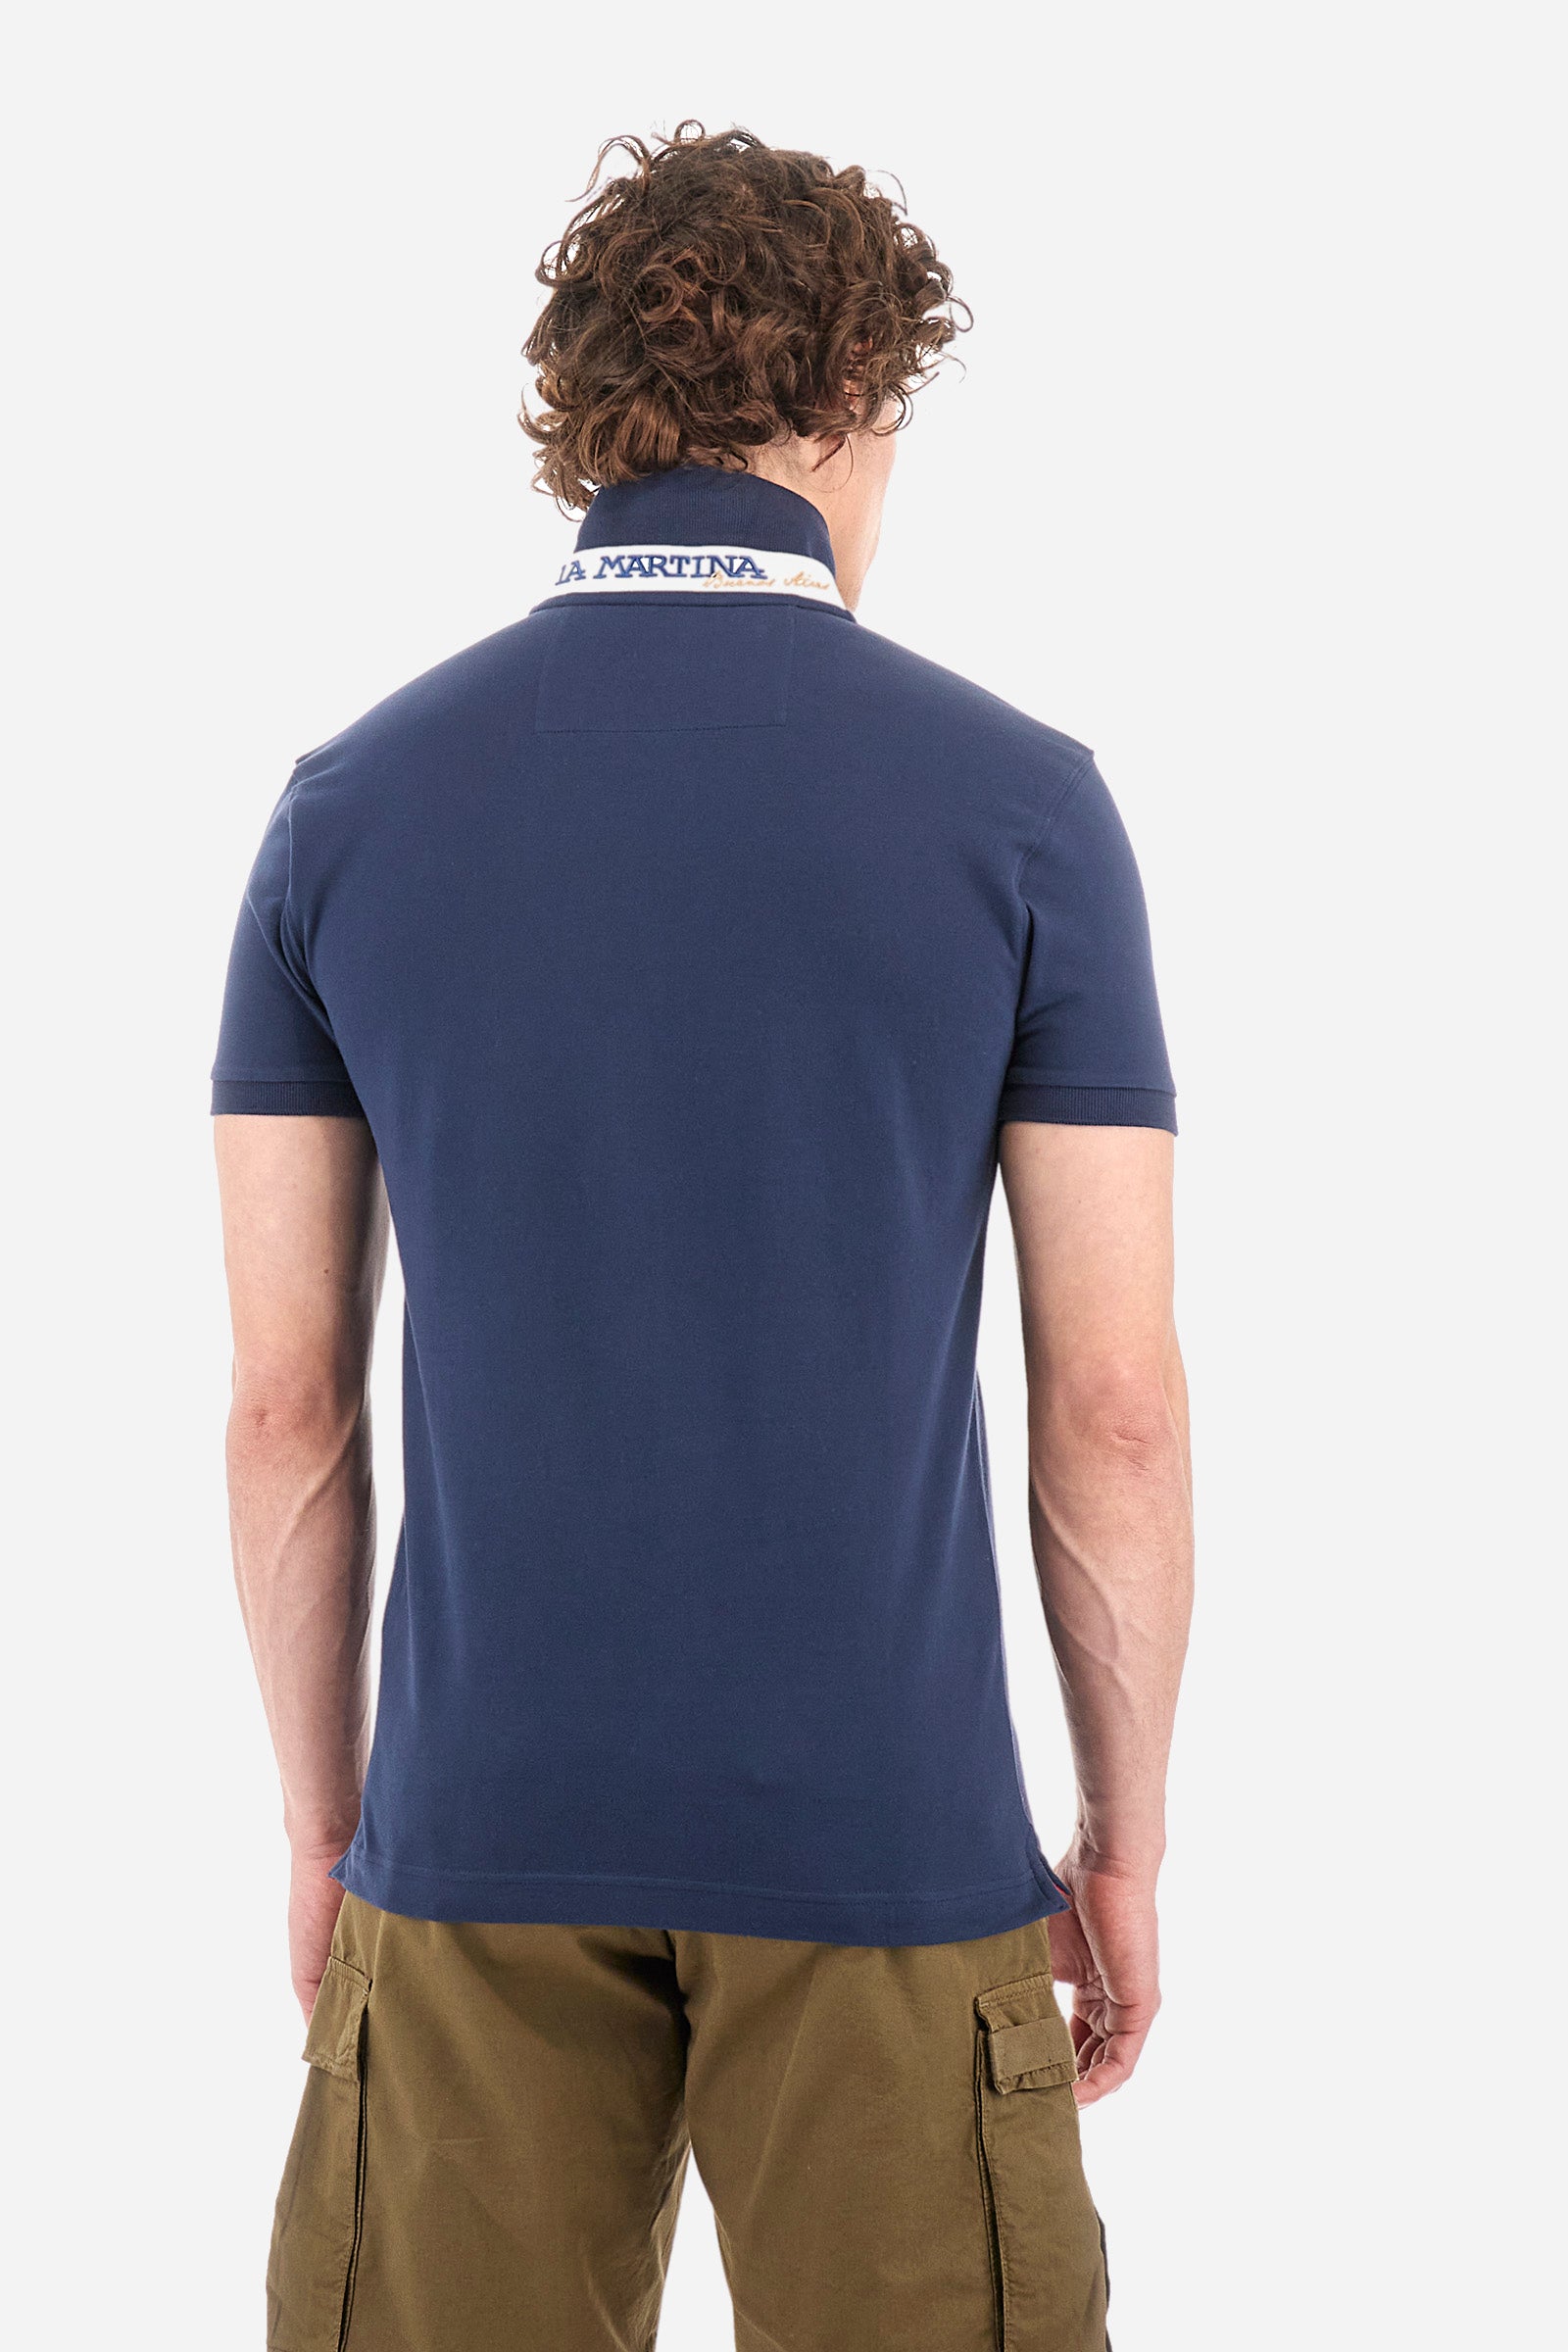 Men's polo shirt in a slim fit - Eduardo